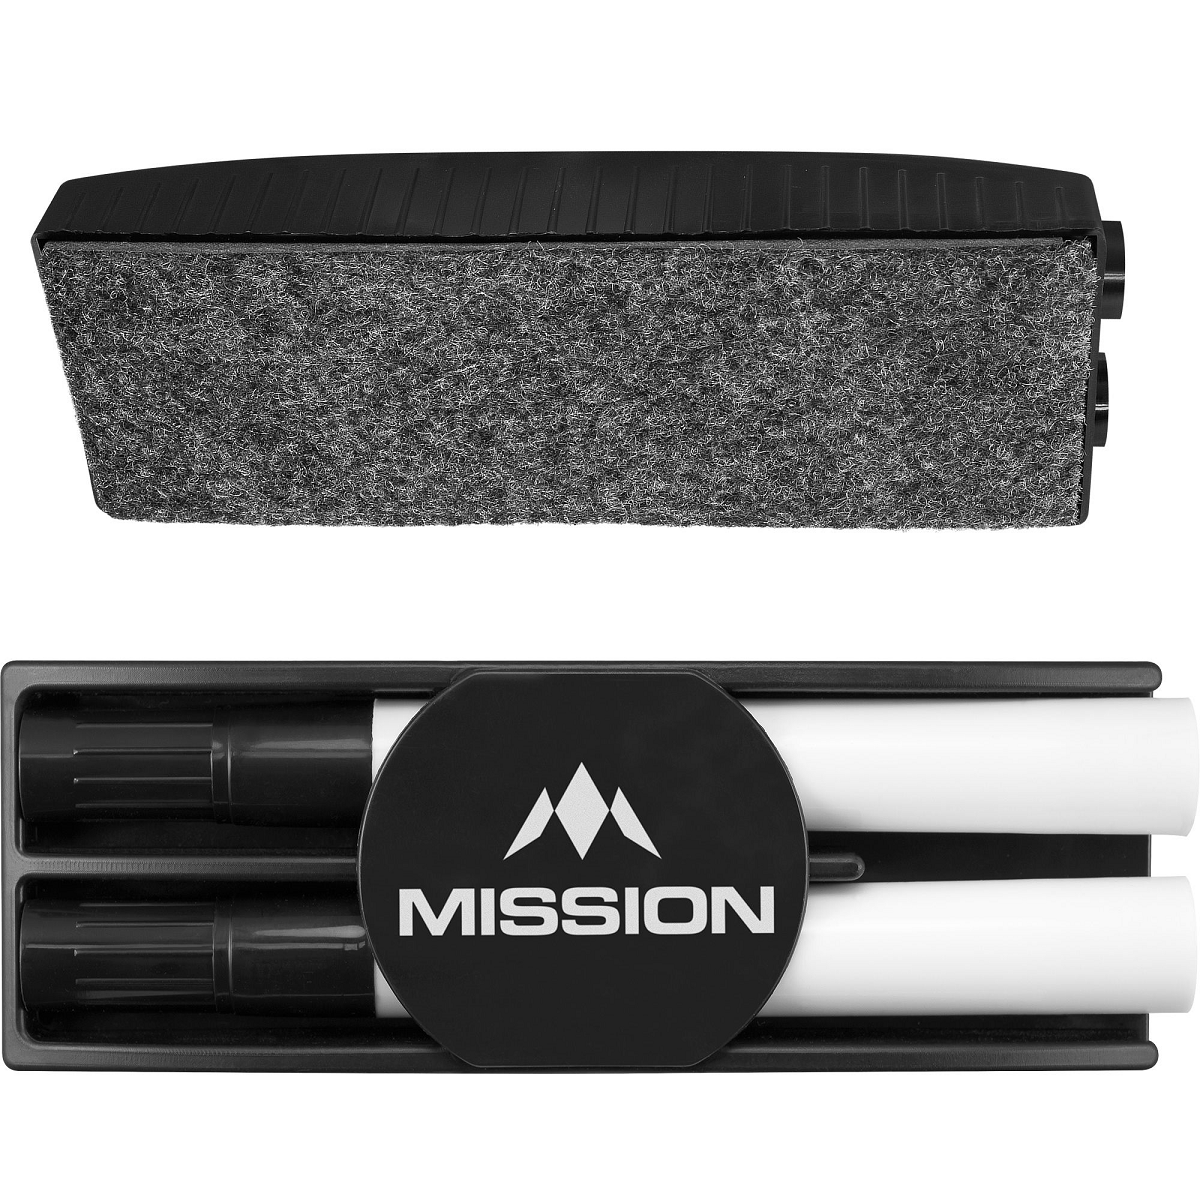 Mission Whiteboard Kit - Dry Wipe Eraser + Pens